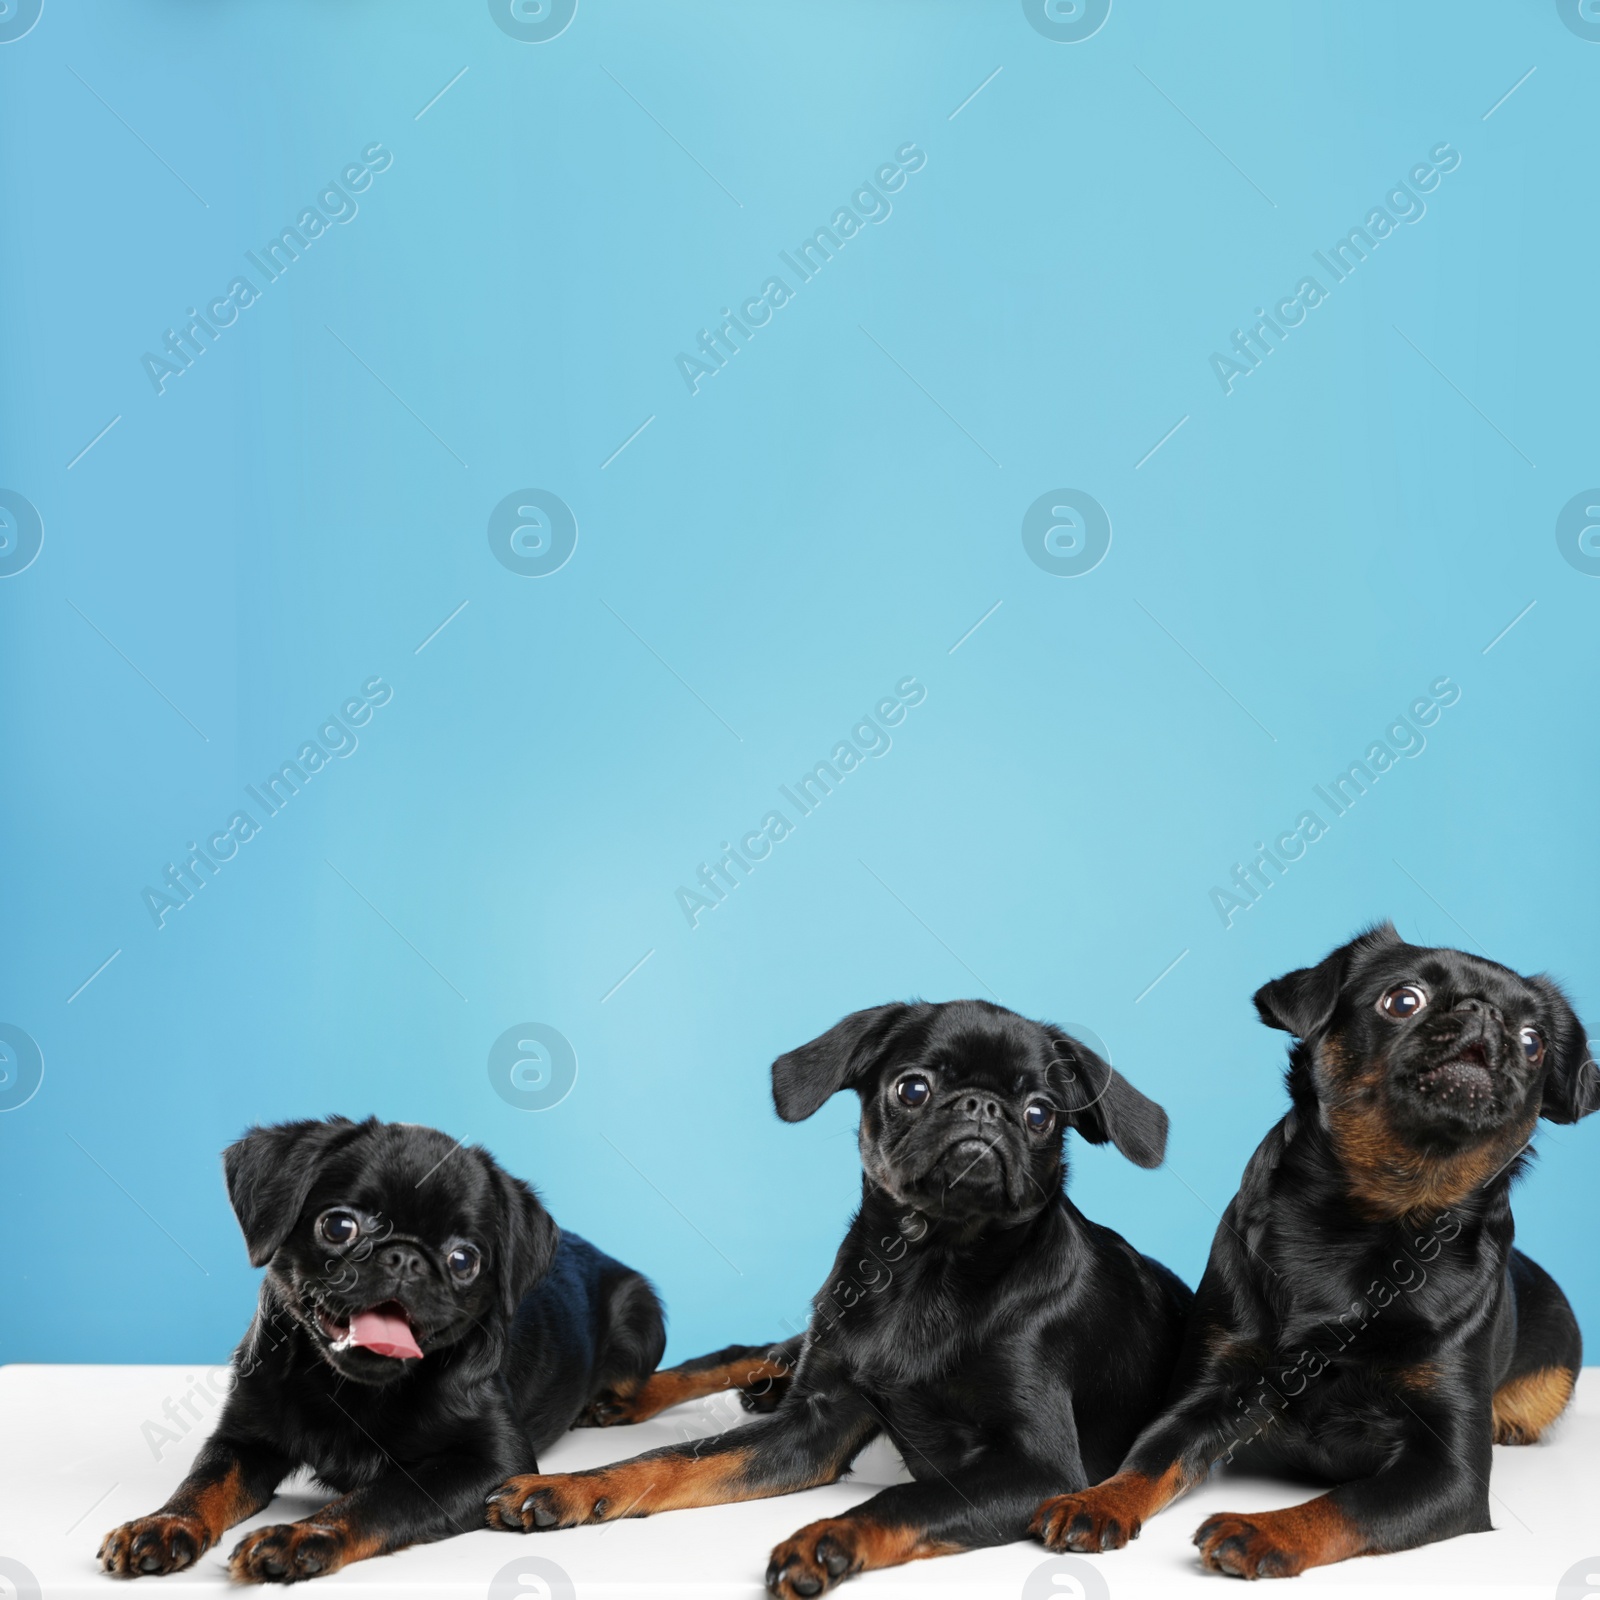 Photo of Adorable black Petit Brabancon dogs on white table against light blue background